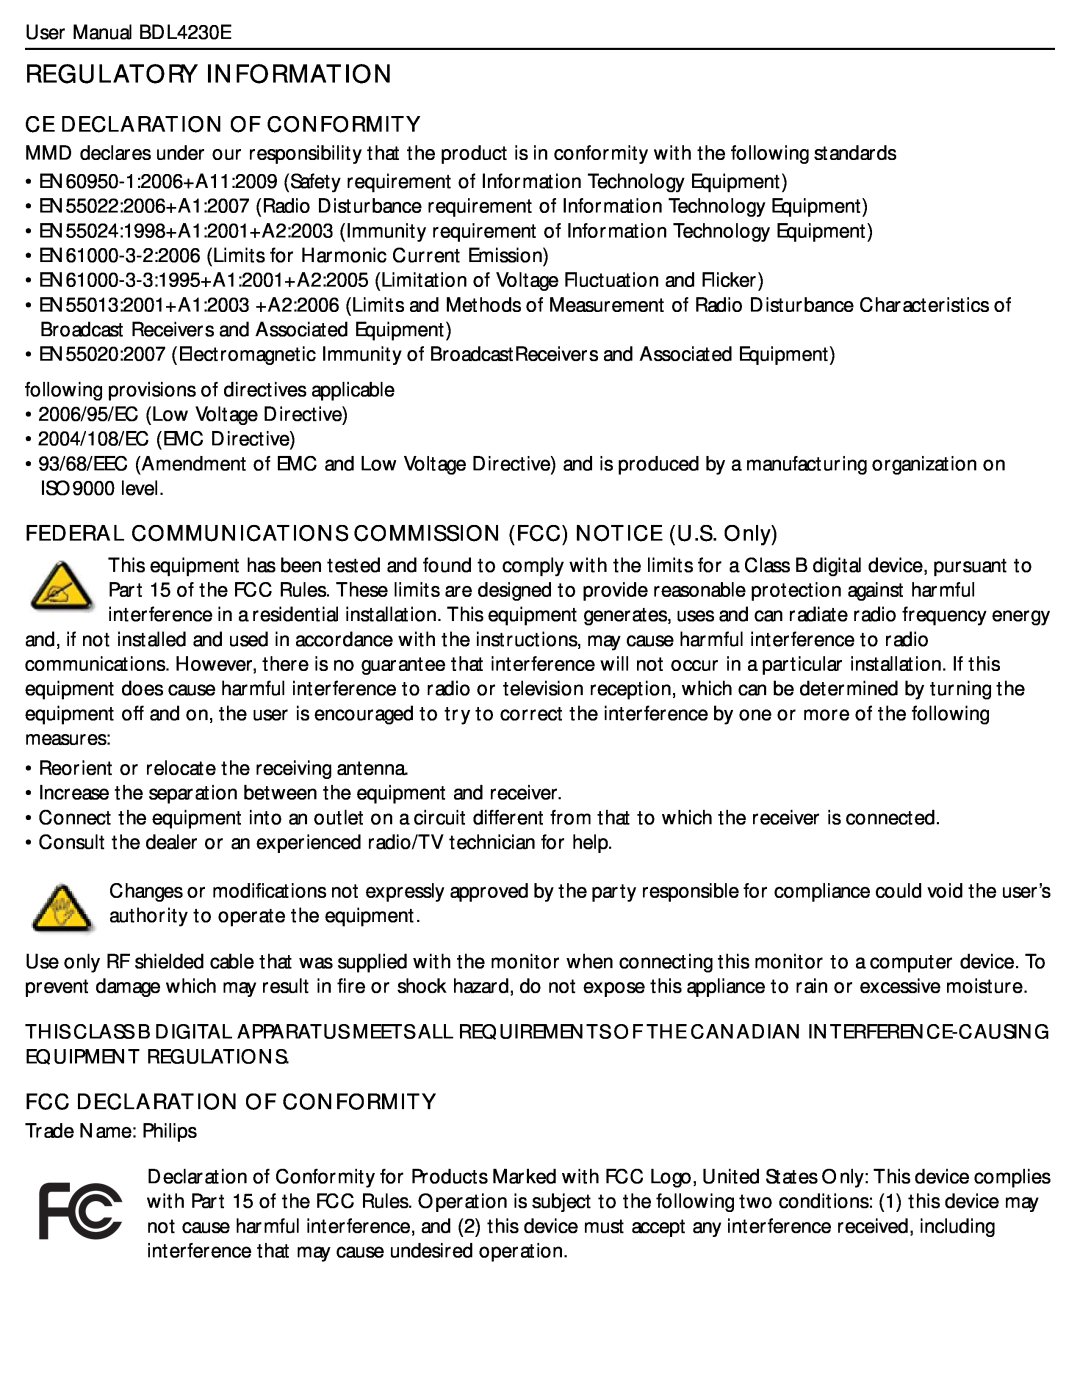 Philips BDL4230E user manual Regulatory Information, Ce Declaration Of Conformity, Fcc Declaration Of Conformity 